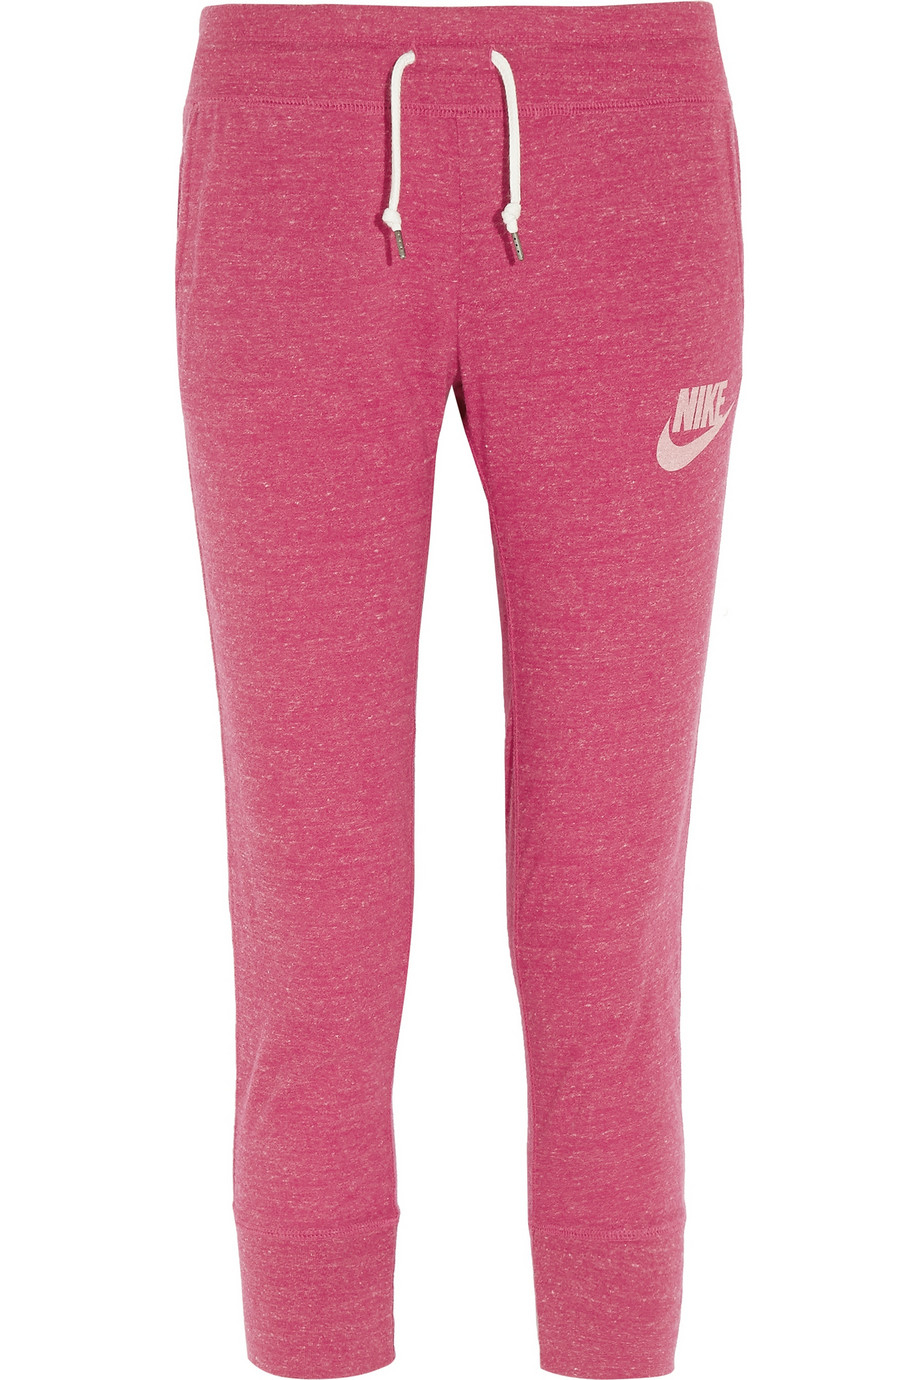 Nike Gym Vintage Capri Cotton-Blend Jersey Track Pants in Pink - Lyst